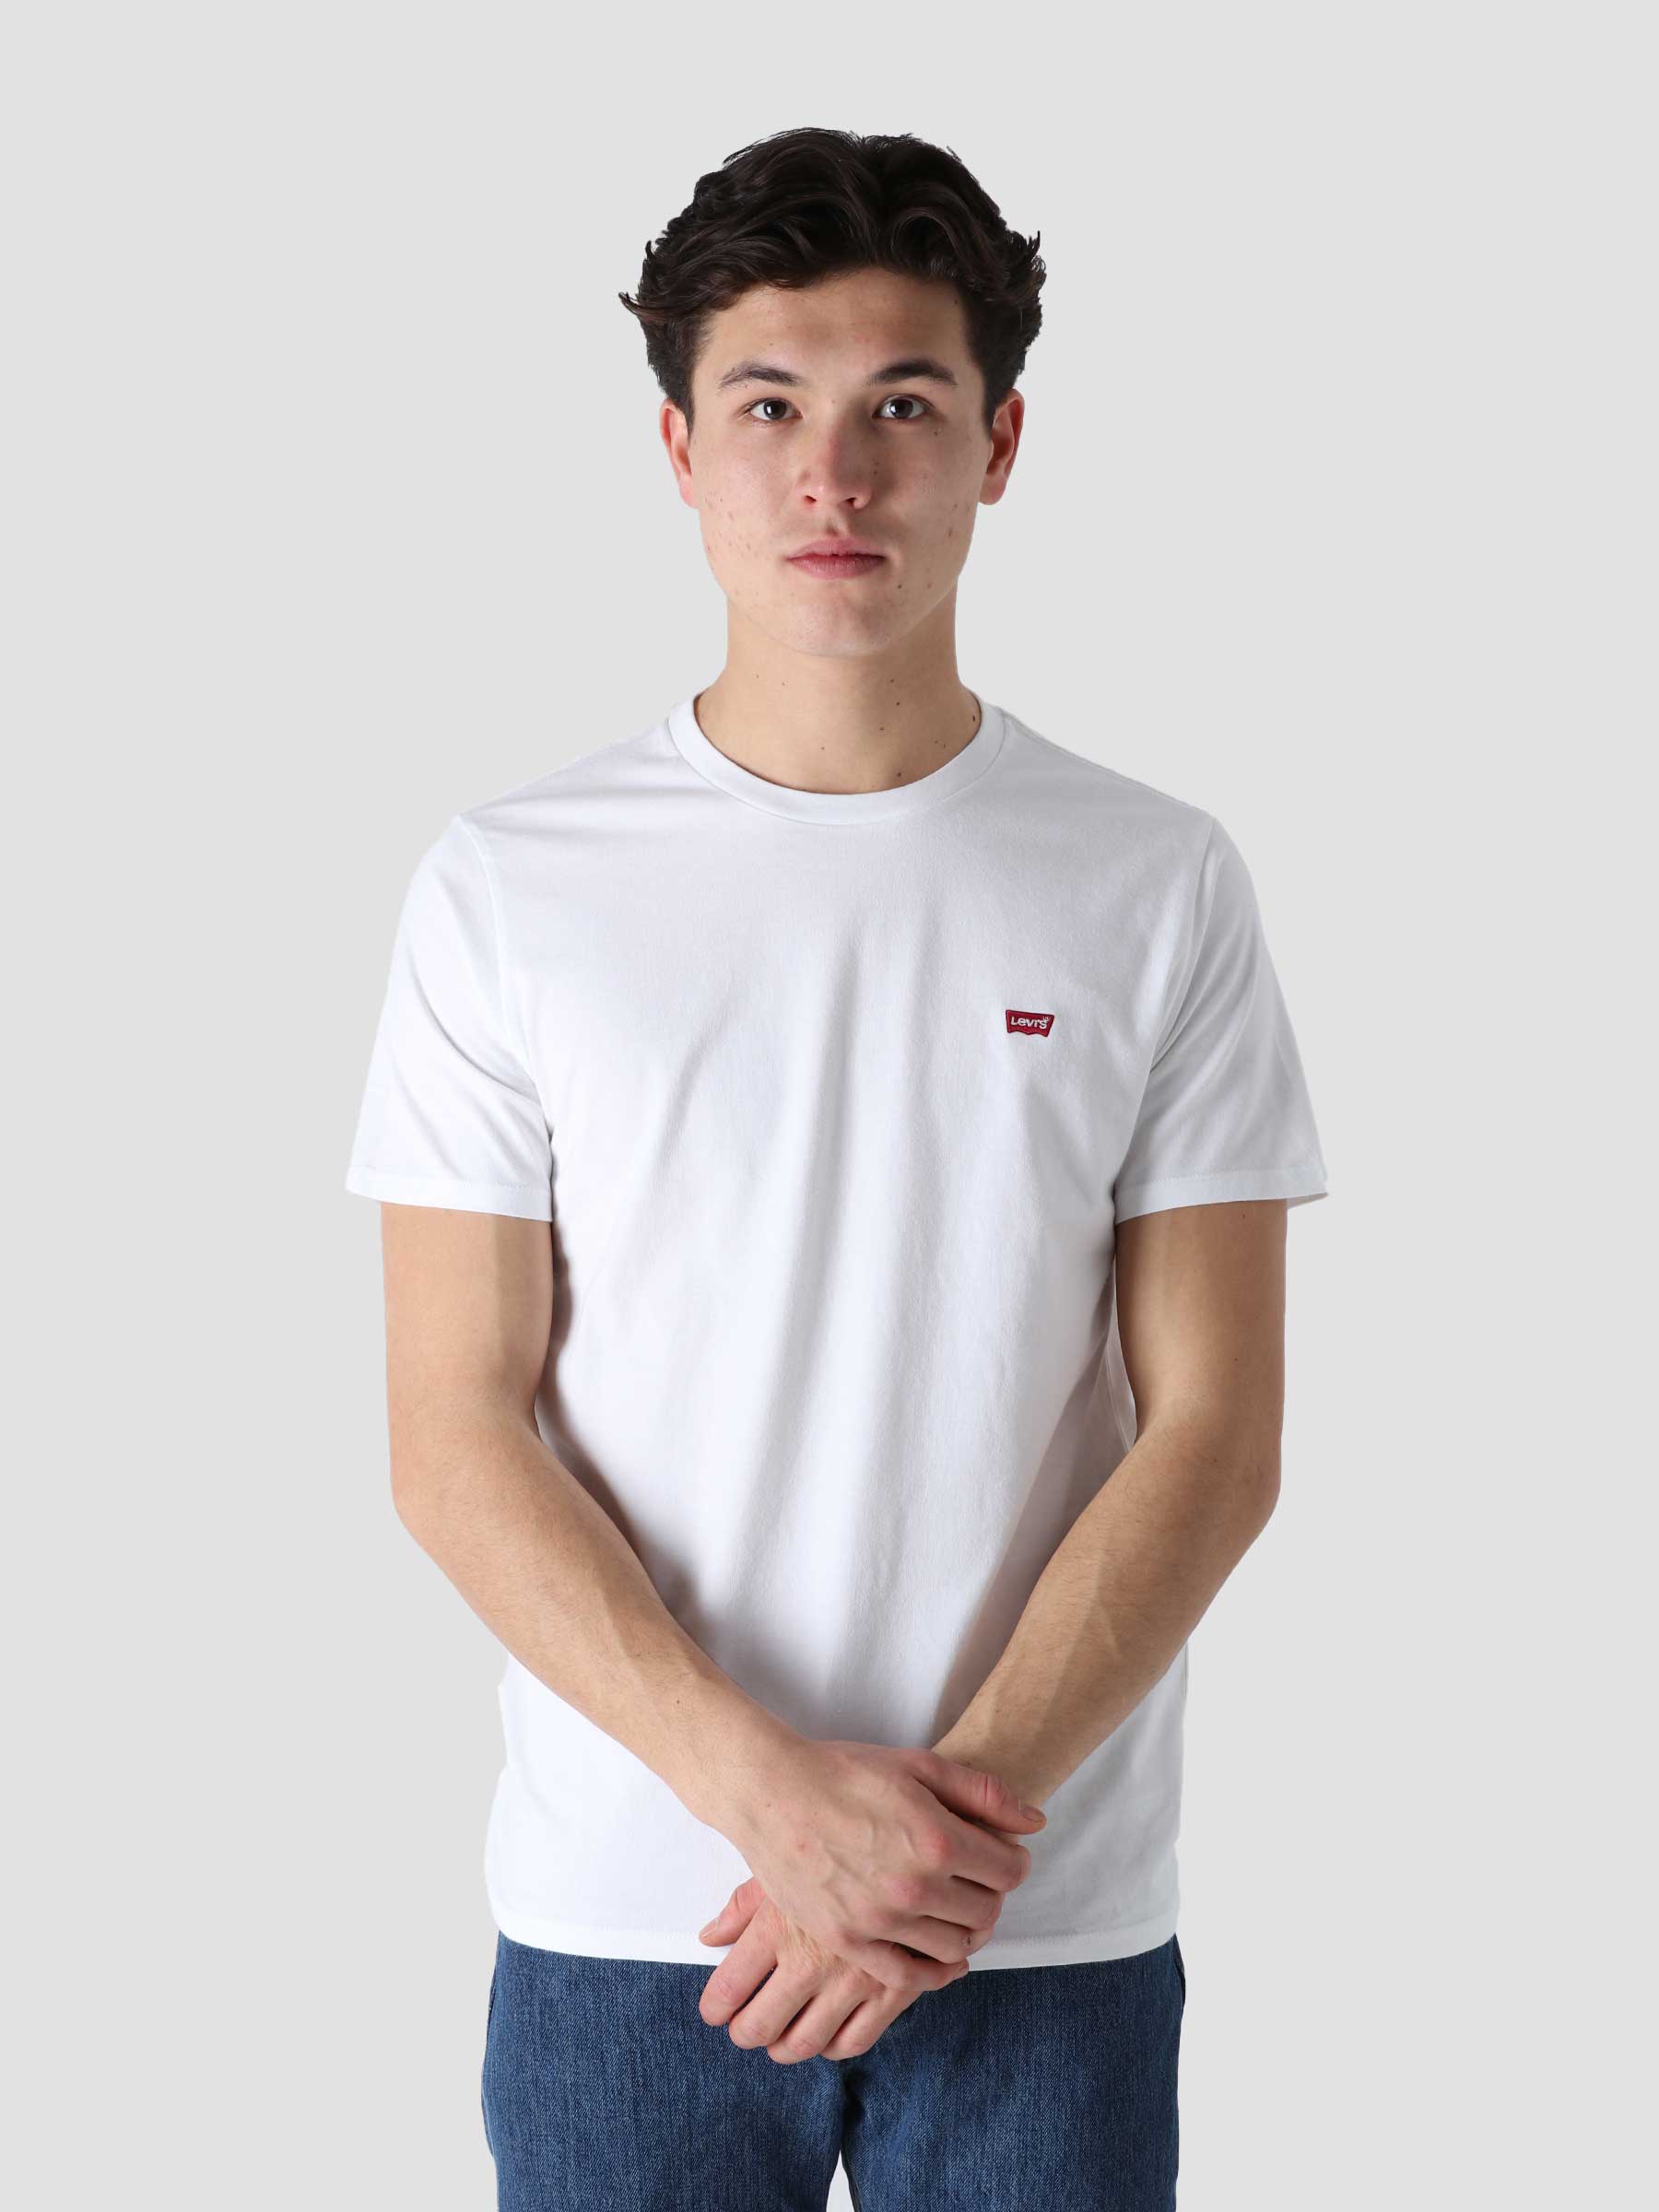 Levis SS Original Hm T-Shirt White + - Freshcotton